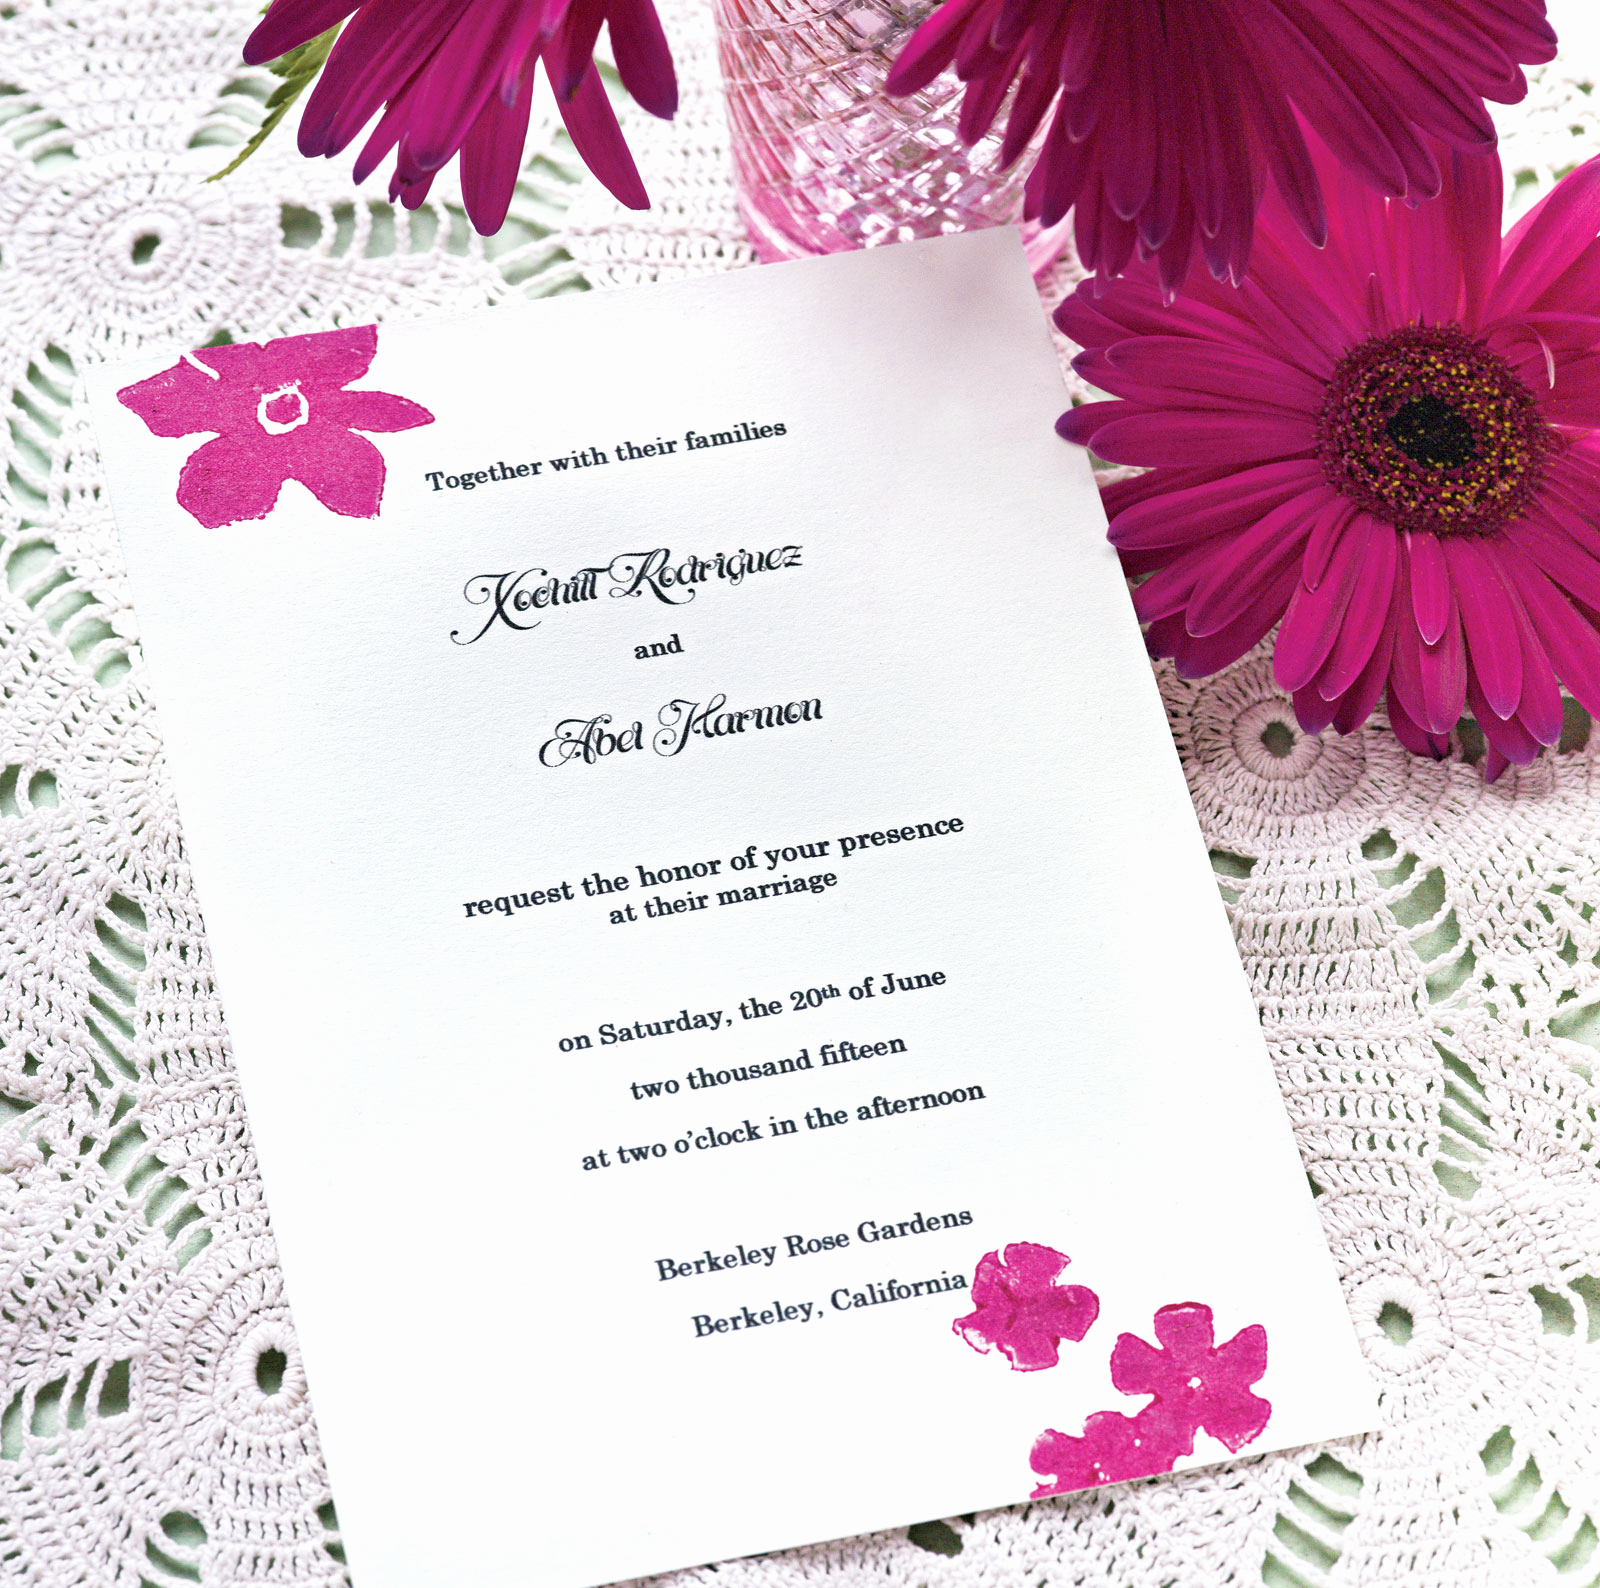 Invitation Card for Weddings Unique Wedding Invitations with Image · Matthewtesting · Storify